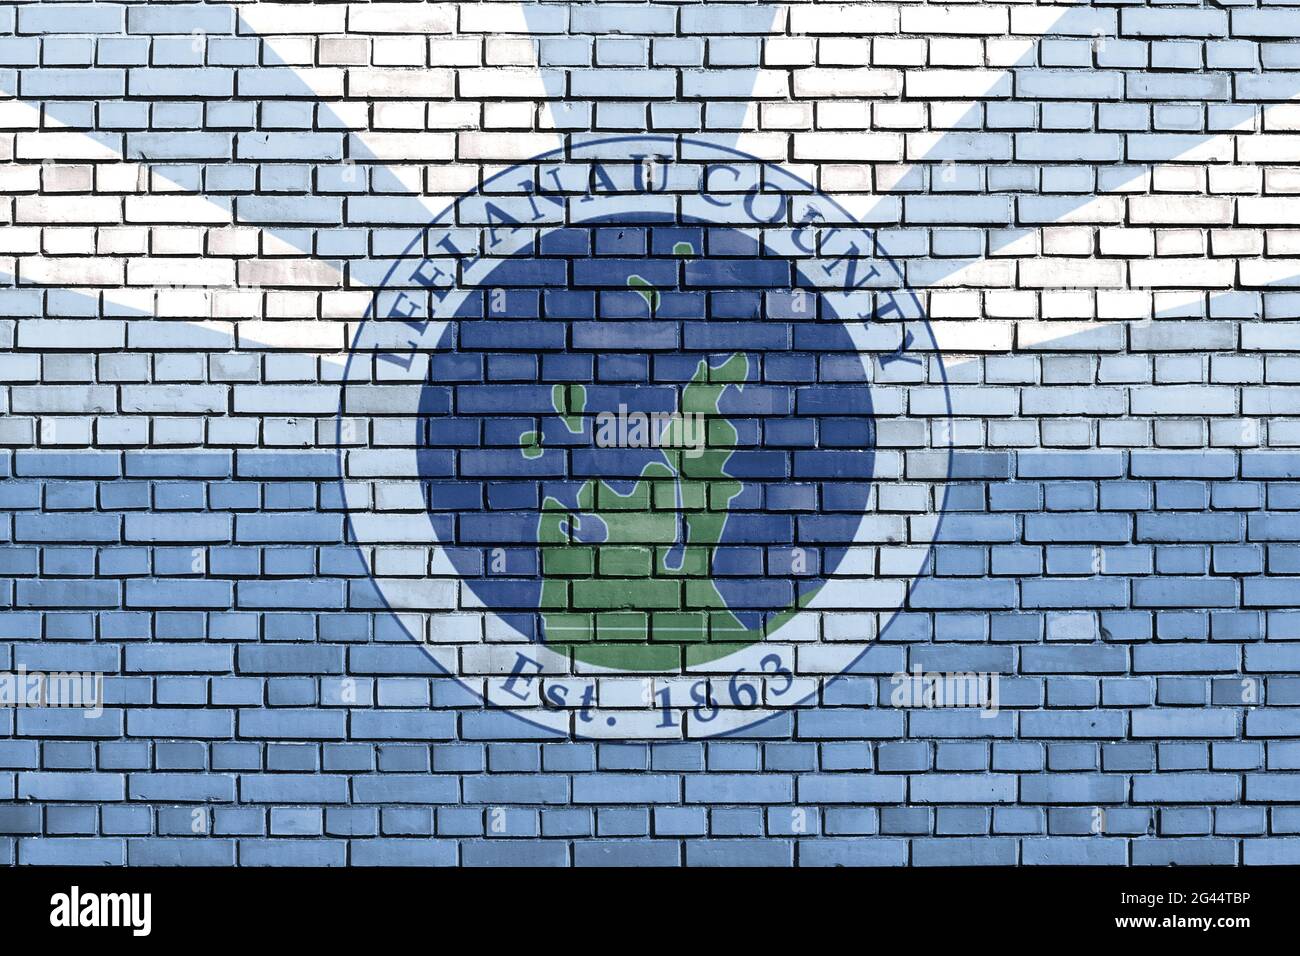 Flag of Leelanau County, Michigan painted on brick wall Stock Photo